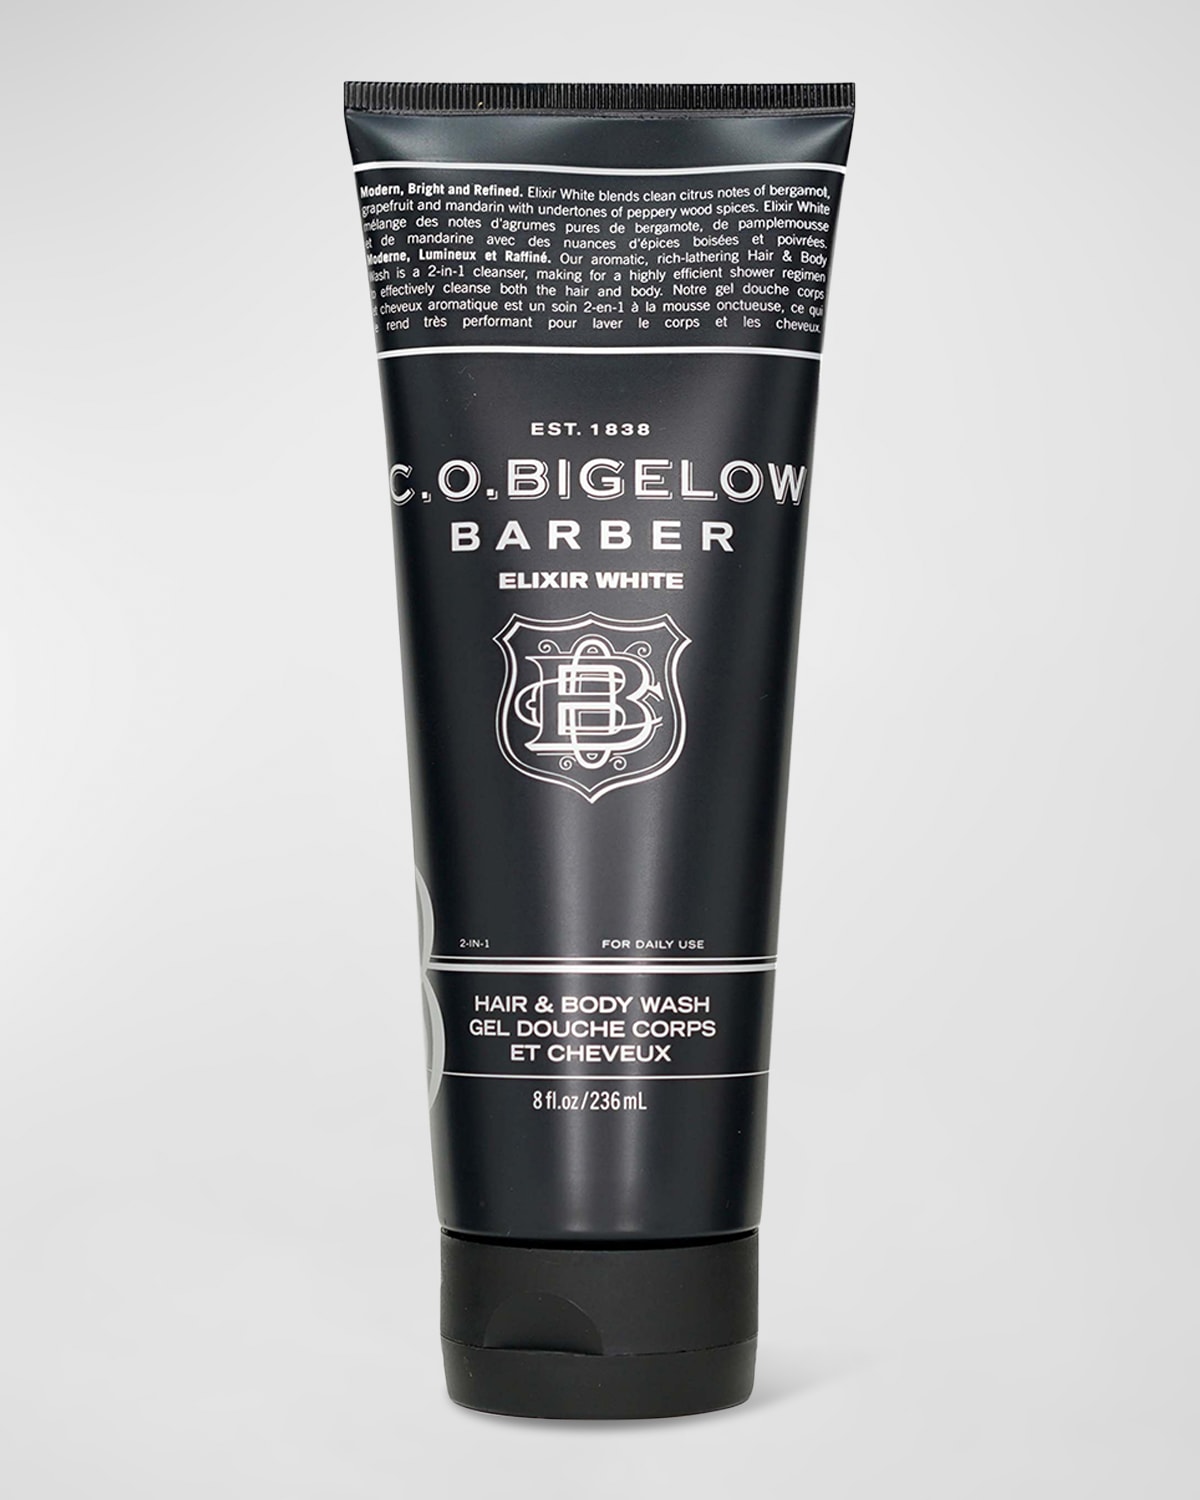 C.O. Bigelow Men's Elixir White Hair and Body Wash, 3.4 oz.